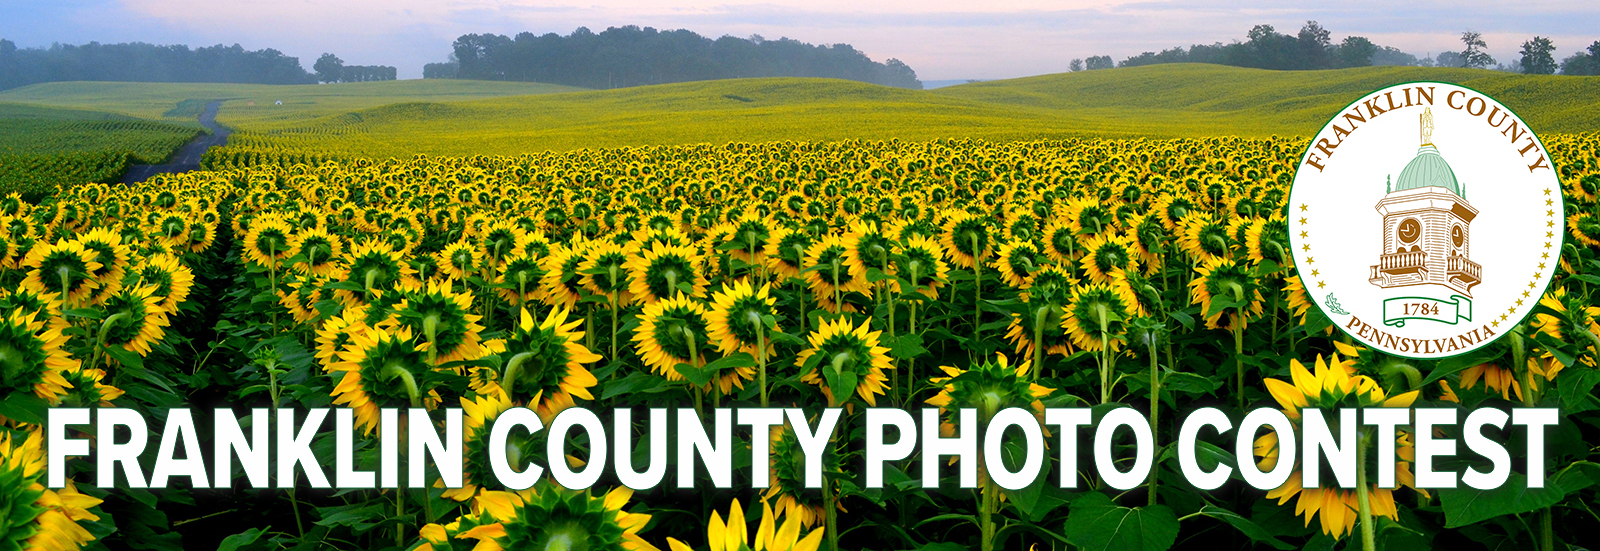 Franklin County Photo Contest